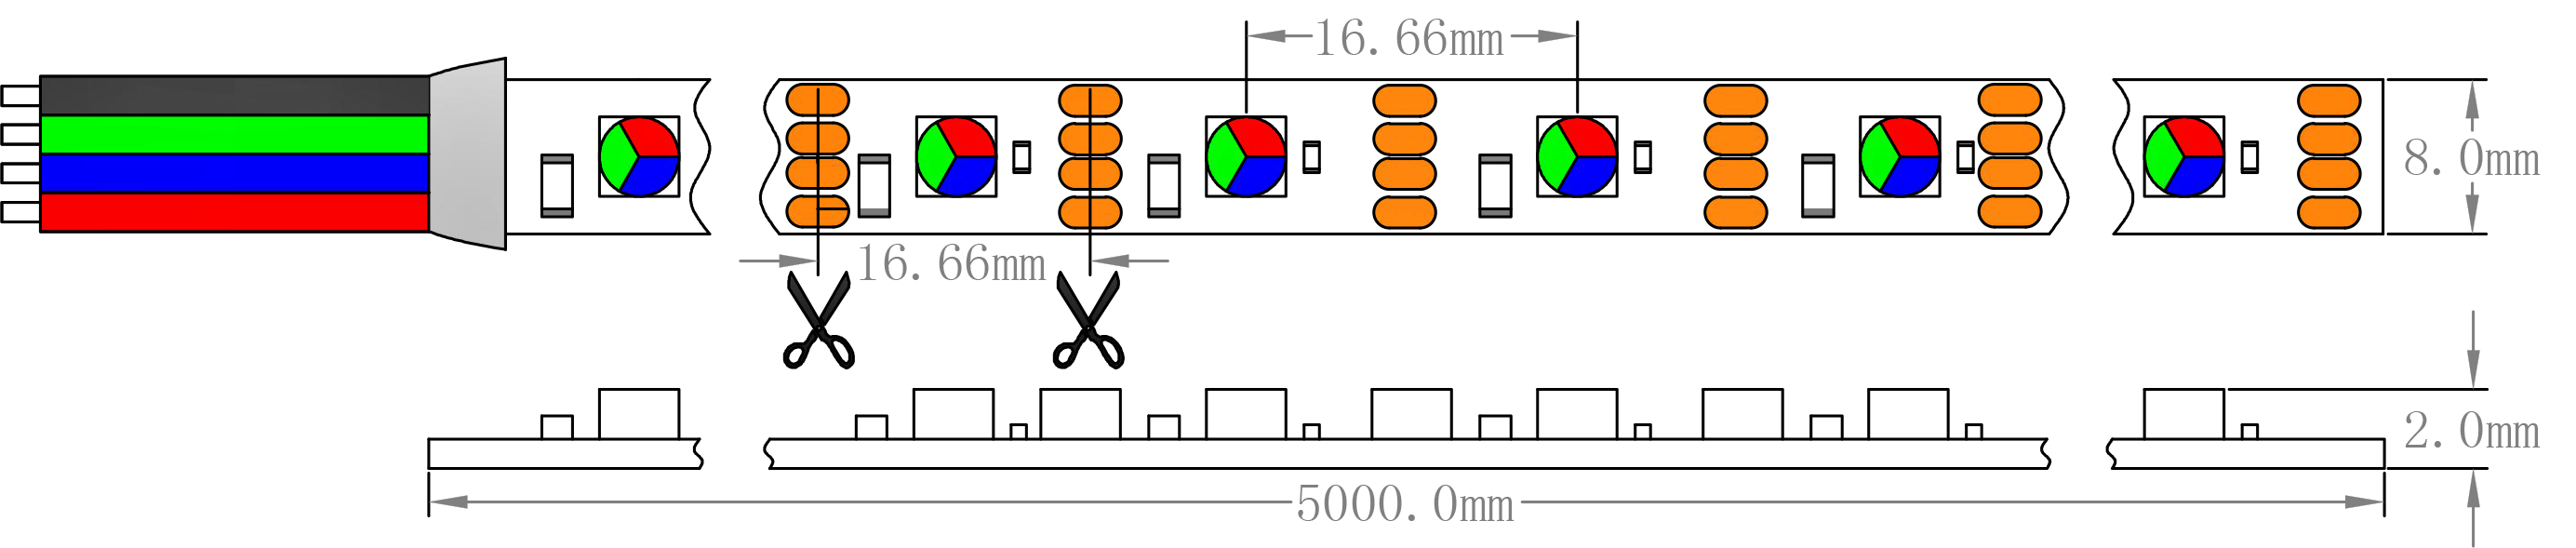 Pixel RGB LED Strip Light Dimension